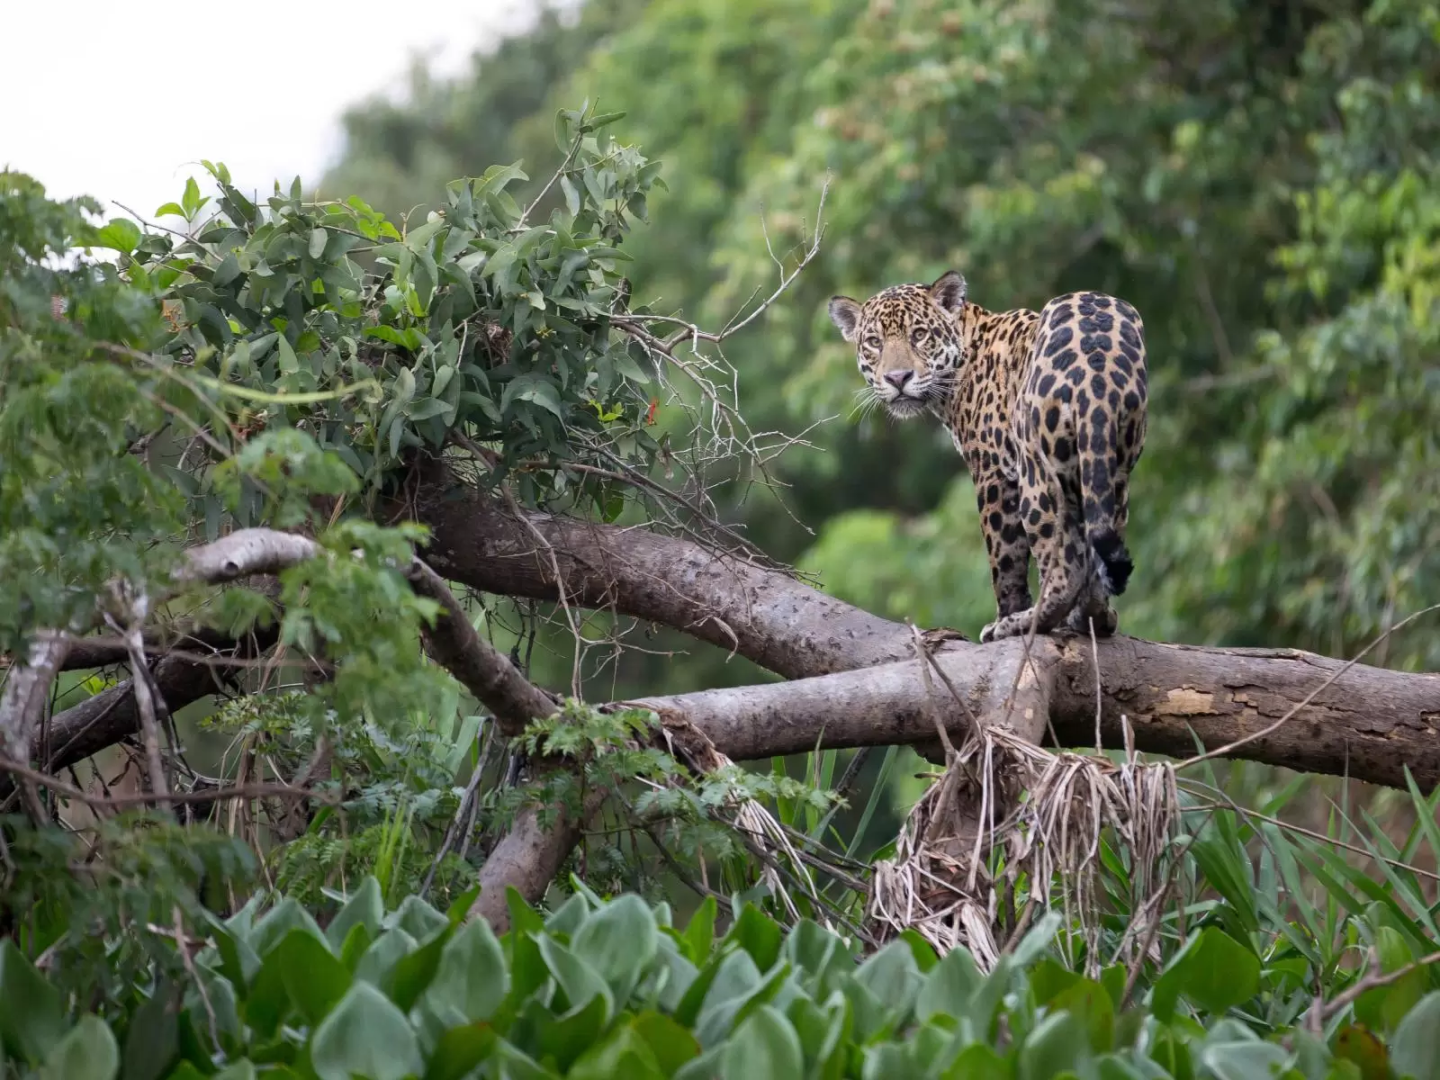 Jaguar on tree limb photographed in Brazilian Pantanal